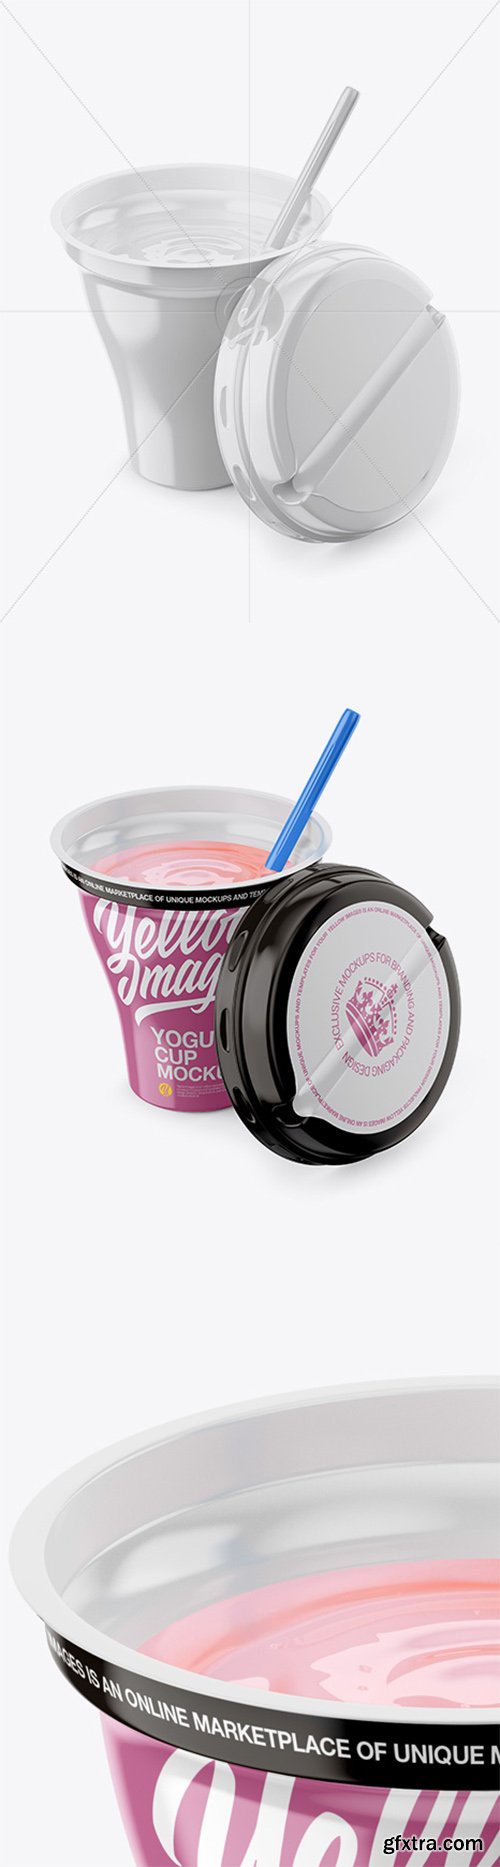 Opened 260g Yogurt Cup With Straw Mockup - Half Side View 21568